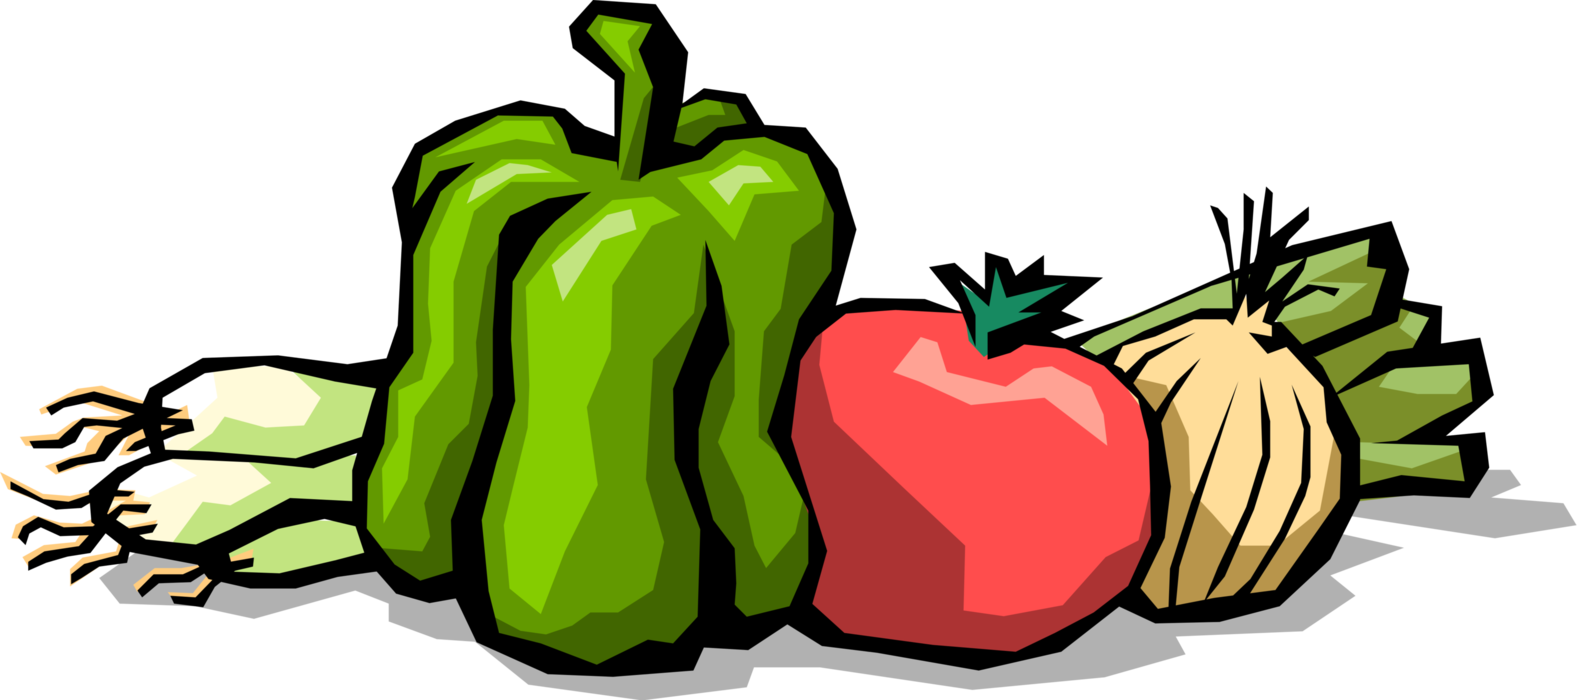 Vector Illustration of Garden Fresh Vegetables Green Pepper, Tomato, Garlic and Onions